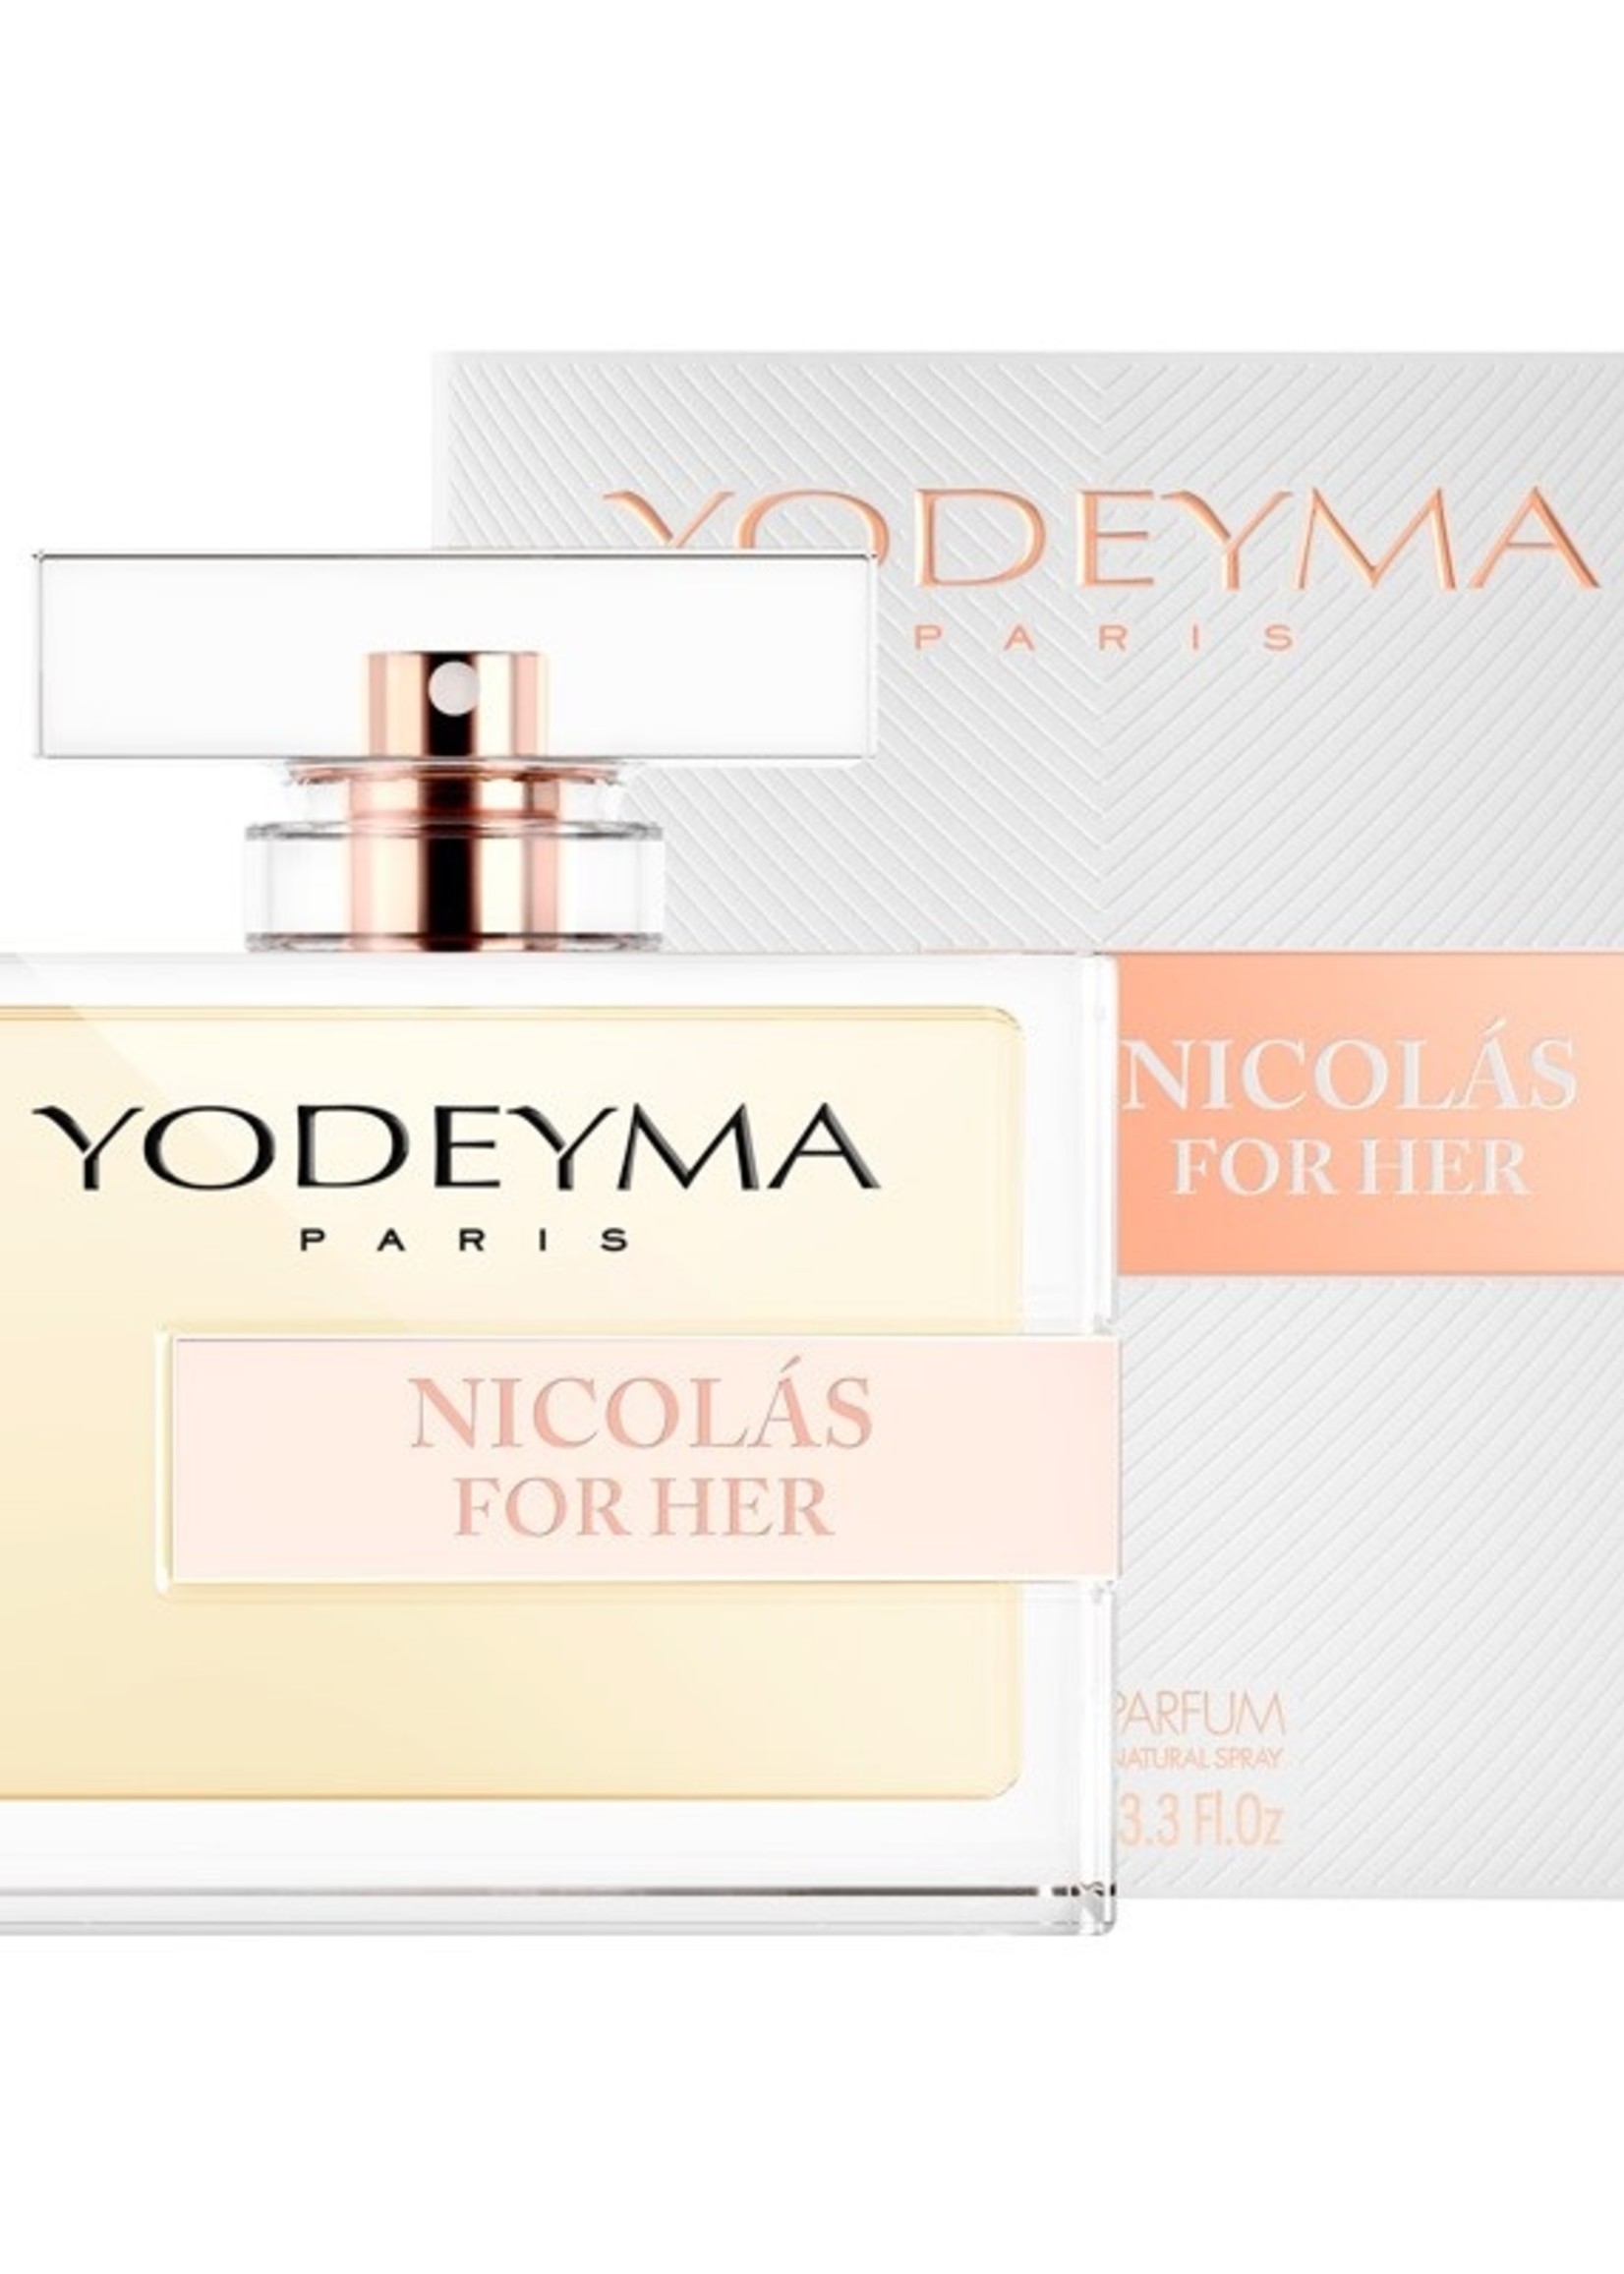 Yodeyma Parfums NICOLÁS FOR HER Eau de Parfum 15 ml.